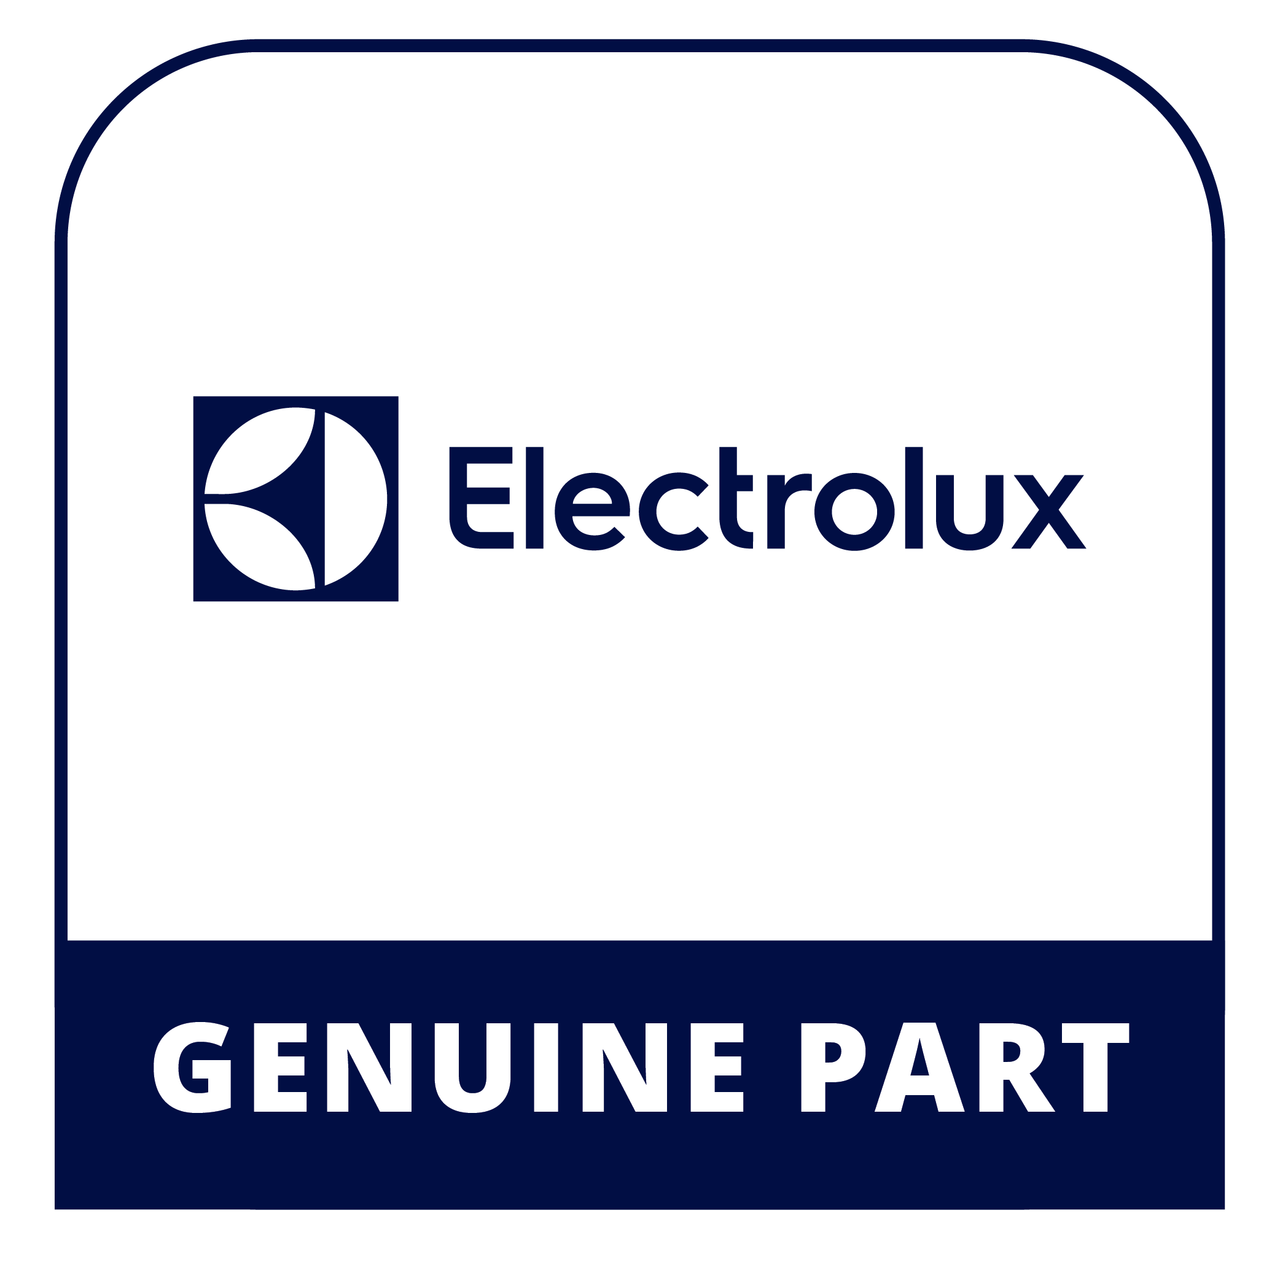 Frigidaire - Electrolux 316633016 Overlay - Genuine Electrolux Part